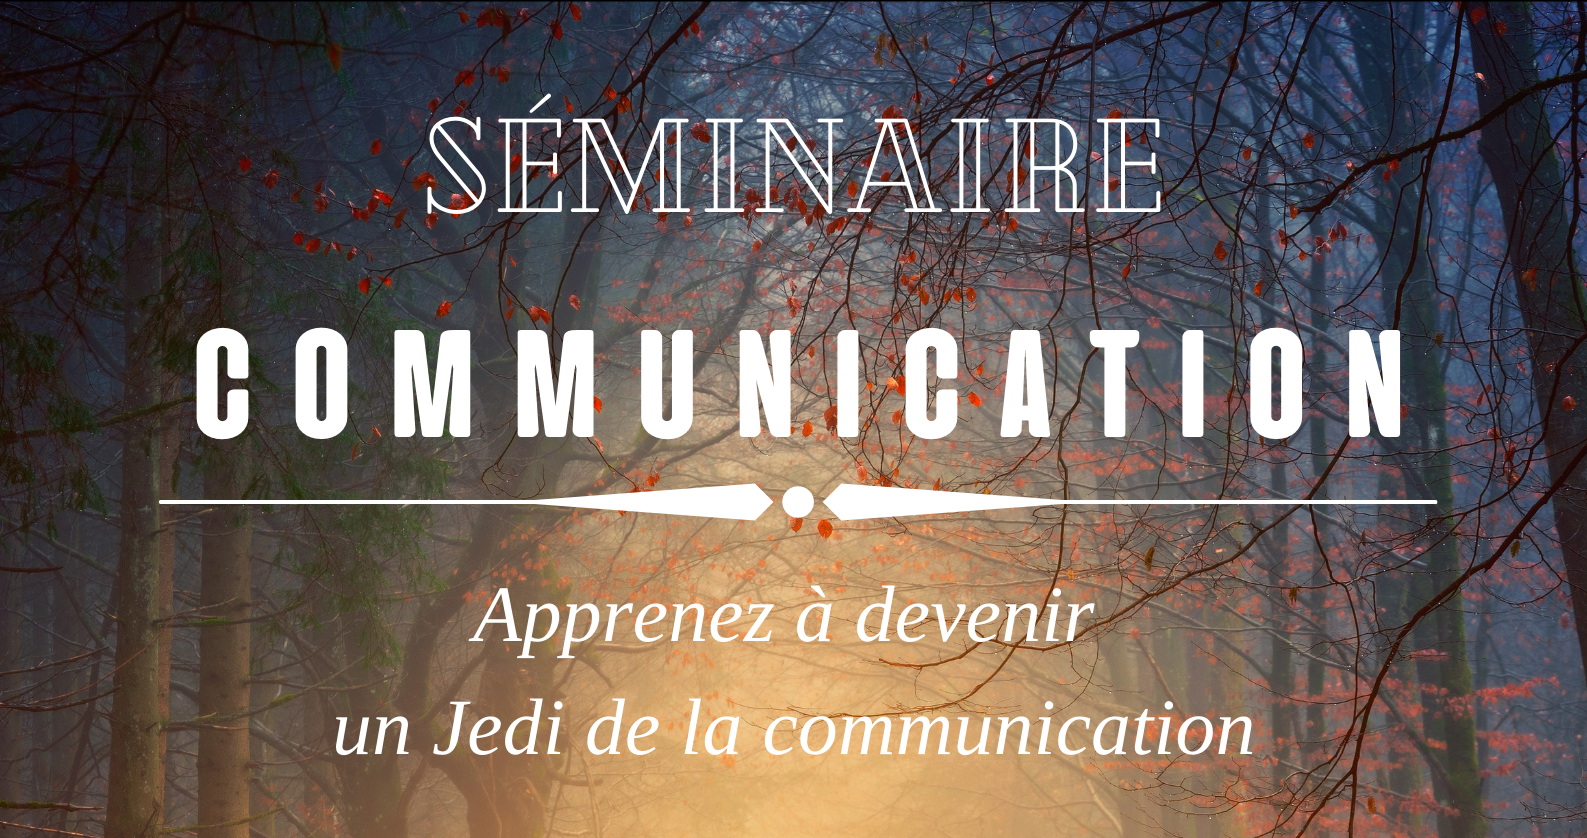 Seminaire communication haut